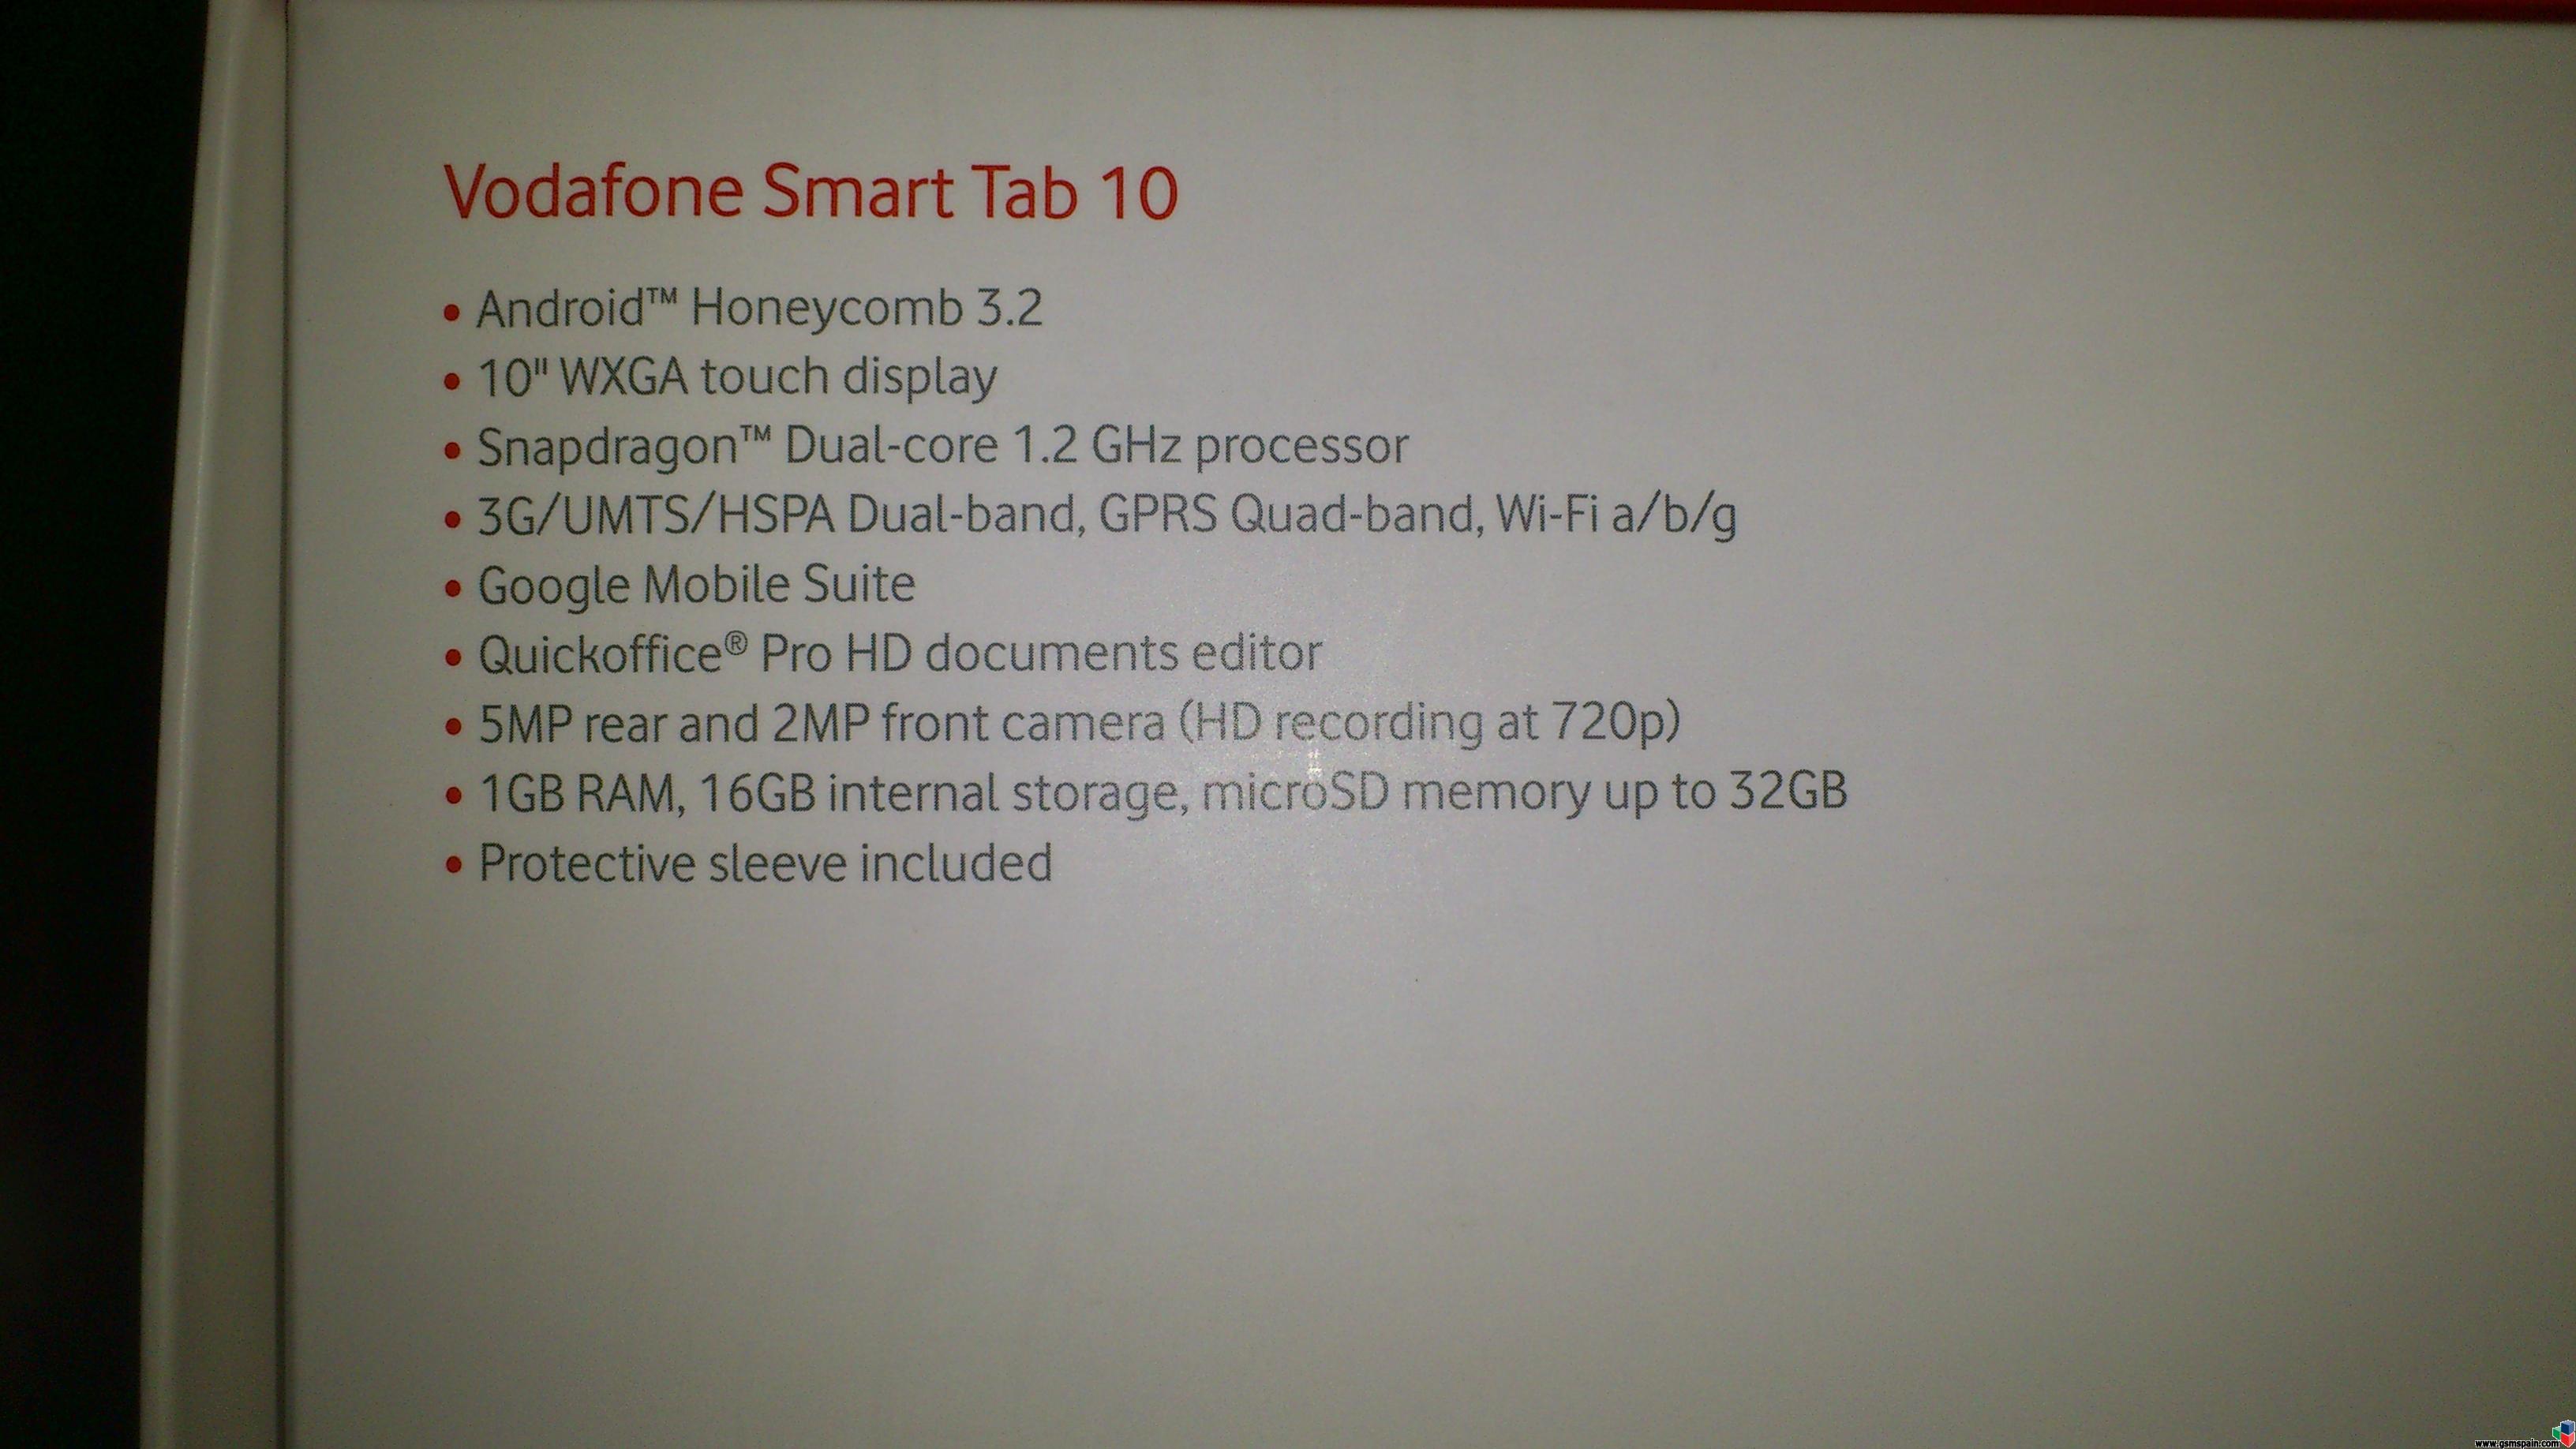 [VENDO] Vodafone smart tab 10" precintada con factura !!!!!!!